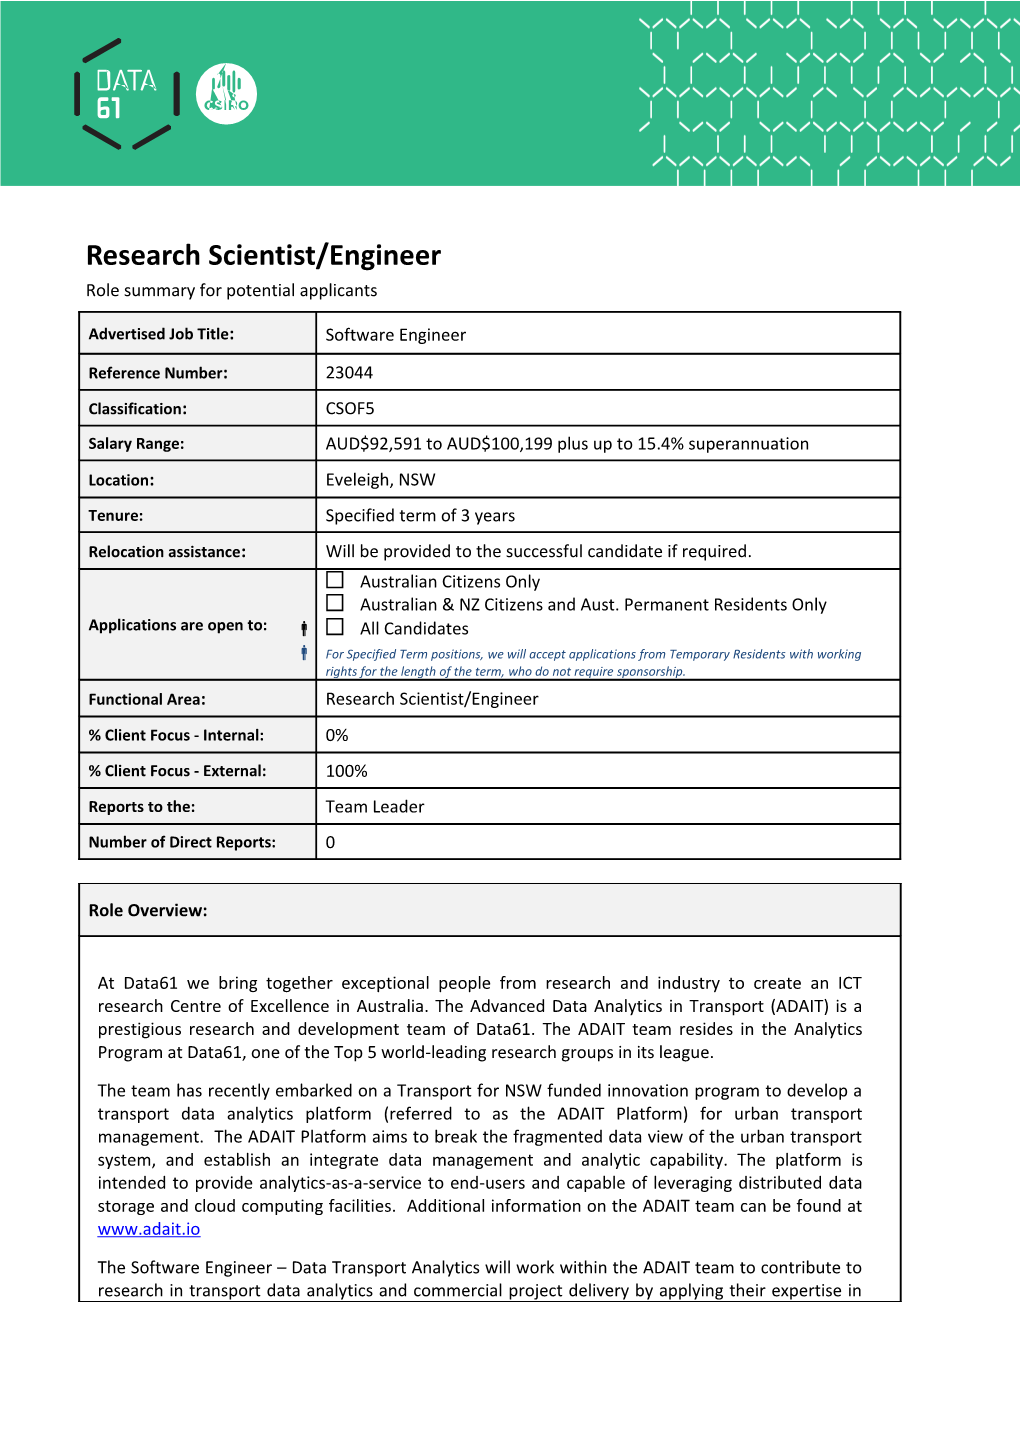 Research Scientist/Engineer